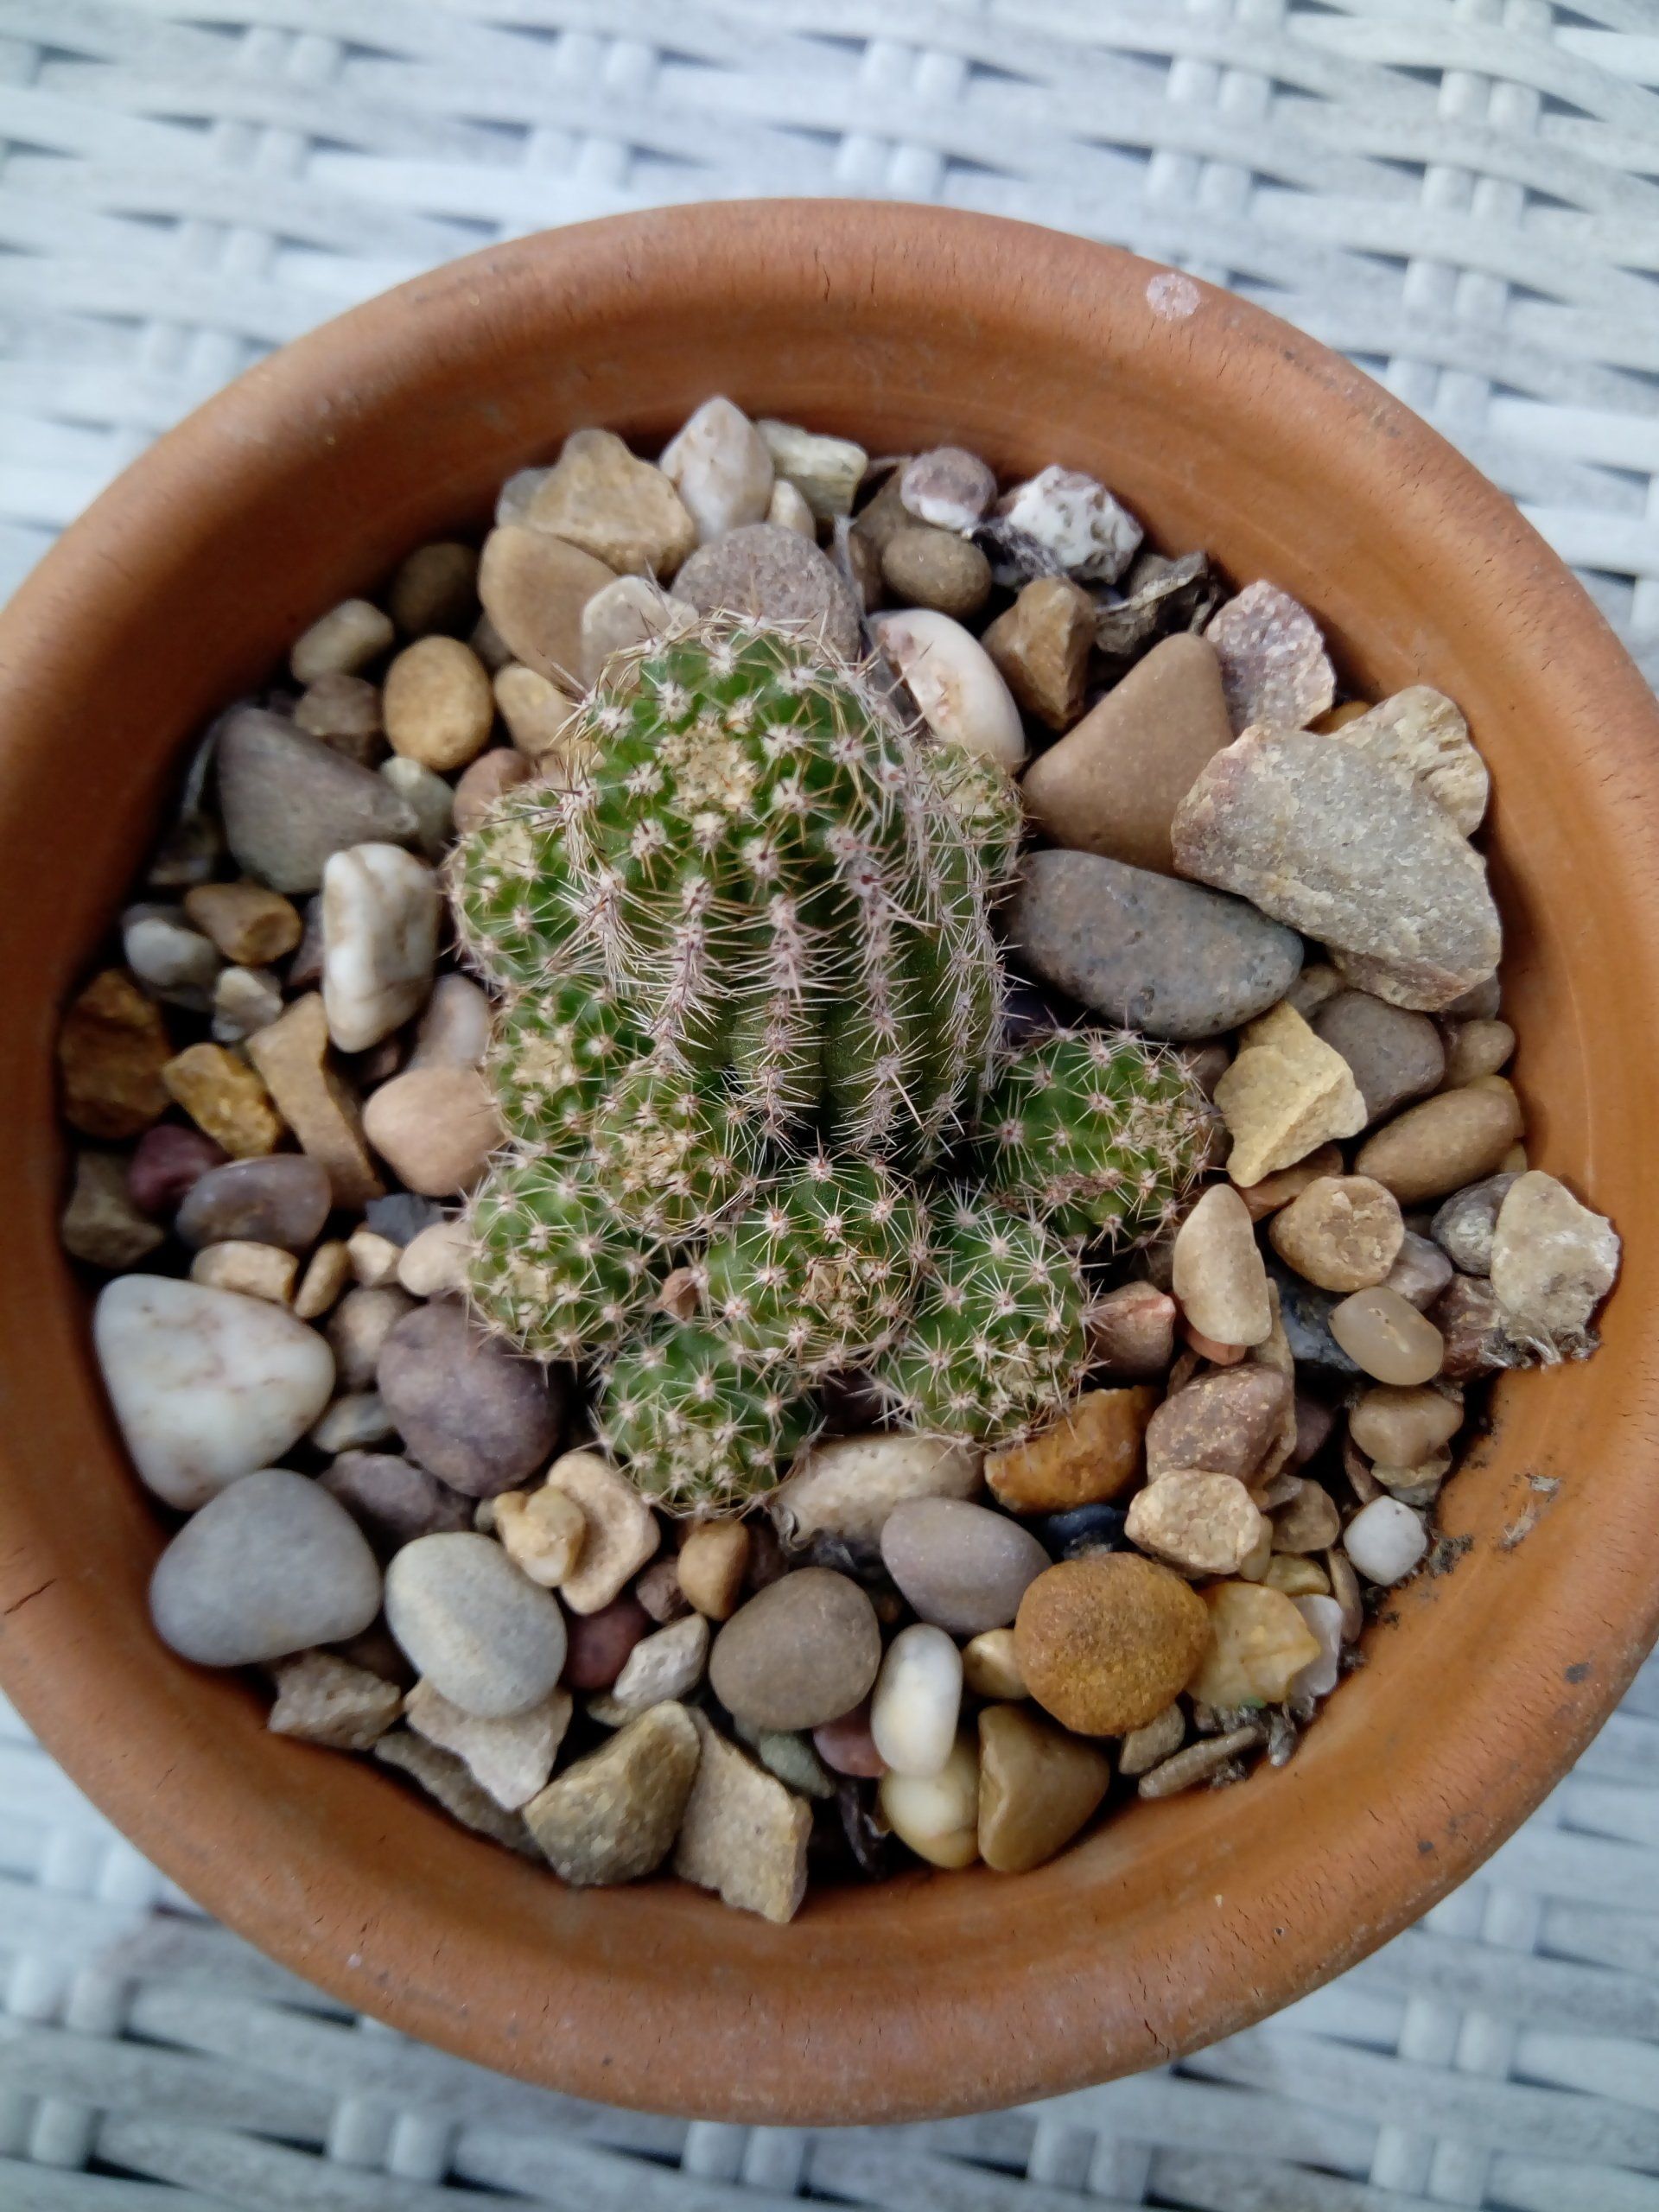 A Chamaelobivia, or Peanut cactus growing in a terracotta pot